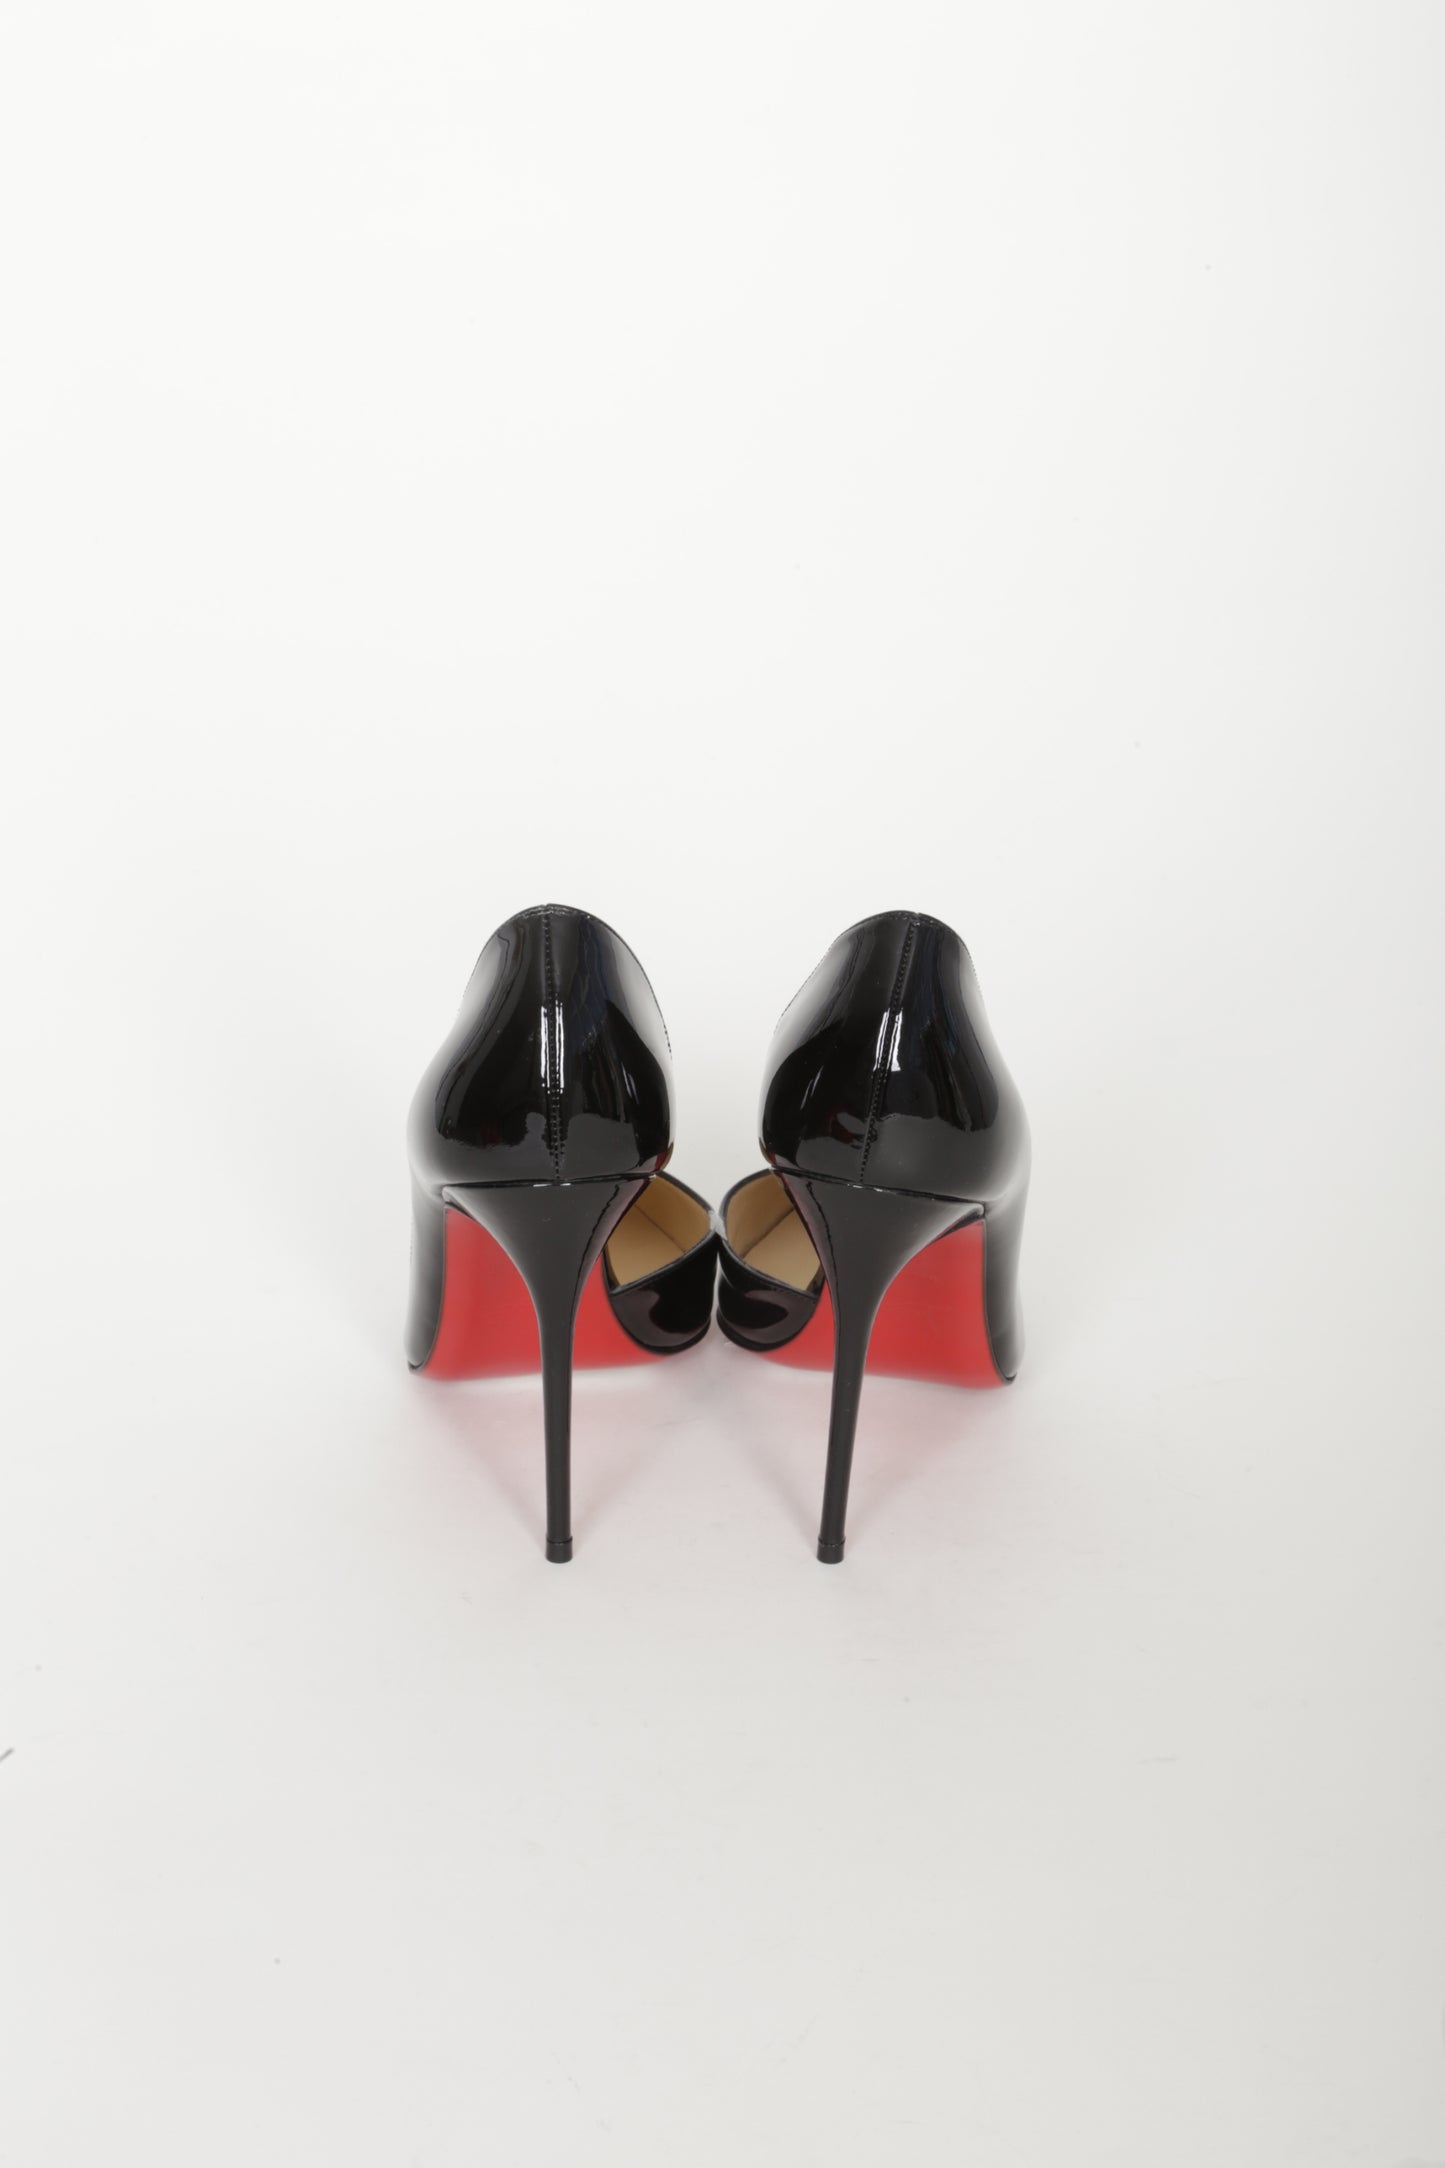 Christian Louboutin Womens Black Shoes Size EU 39.5